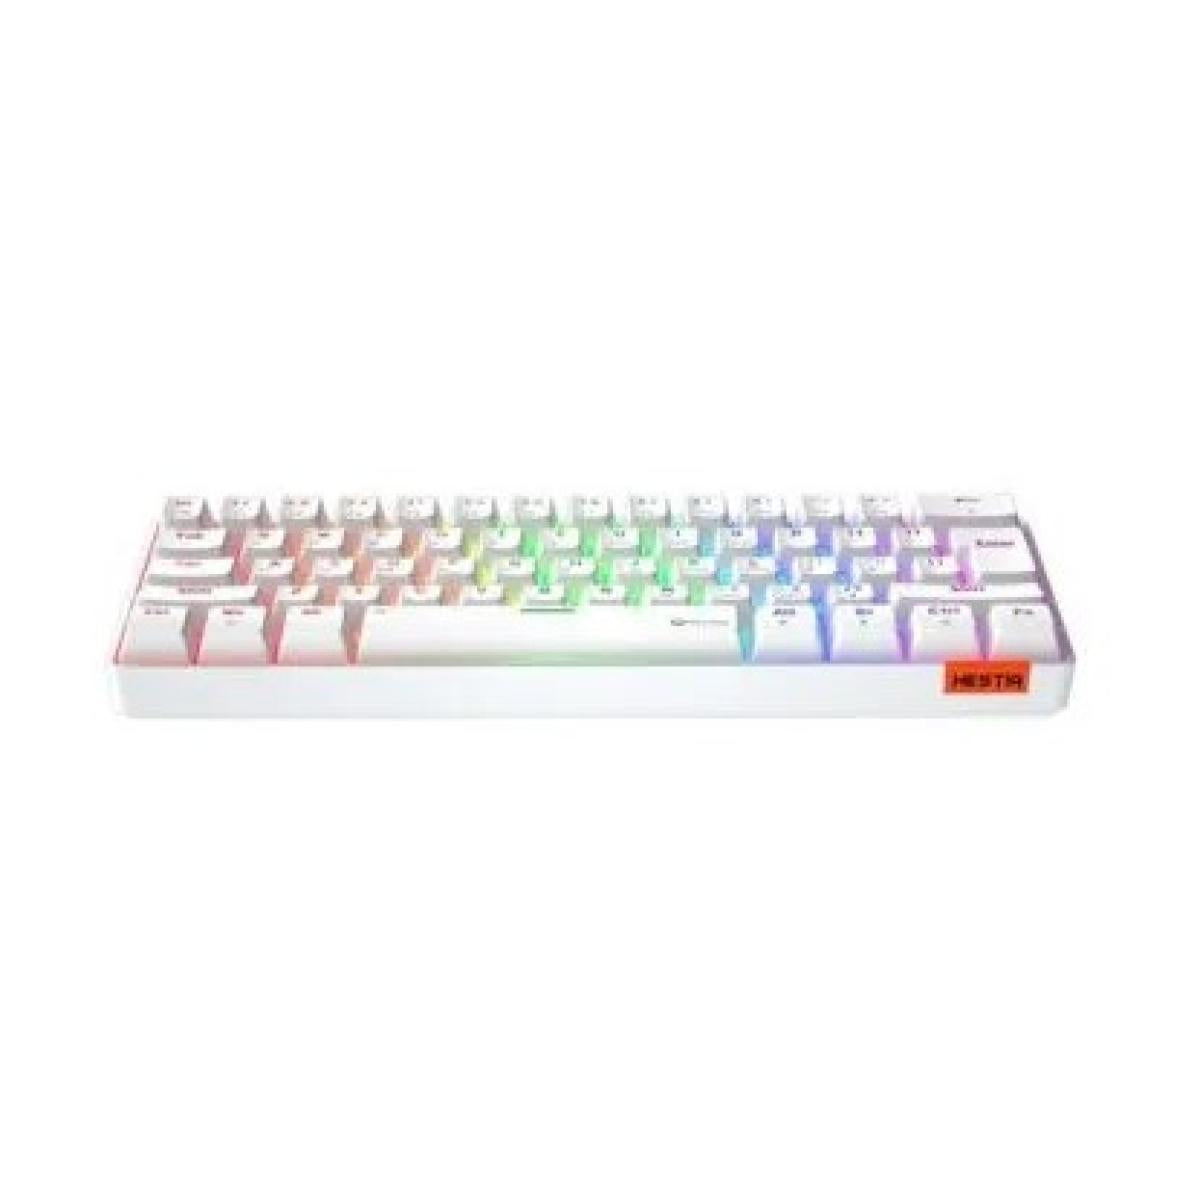 Meetion Hestia RGB 60% Mechanical Gaming Keyboard - White